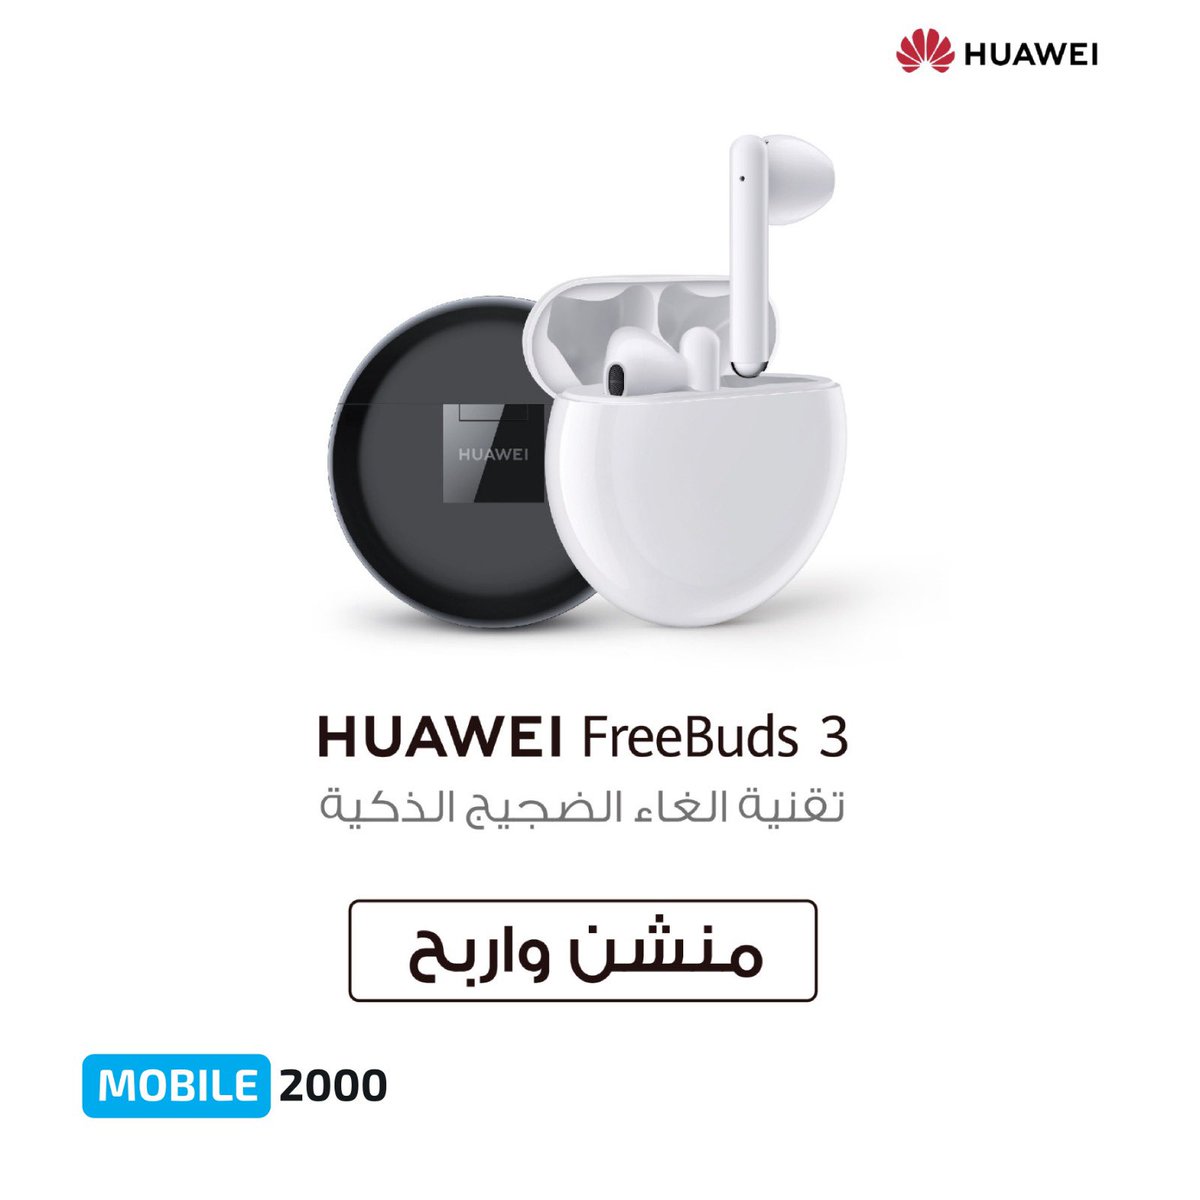 Mobile 2000 On Twitter فرصتك لربح Huaweifreebuds3 الجديدة الشروط والأحكام منشن كثر ما تقدر المشاركة من الكويت فقط سيتم الاعلان عن الفائز بعد تاريخ ٢٥ نوفمبر A Chance To Win The